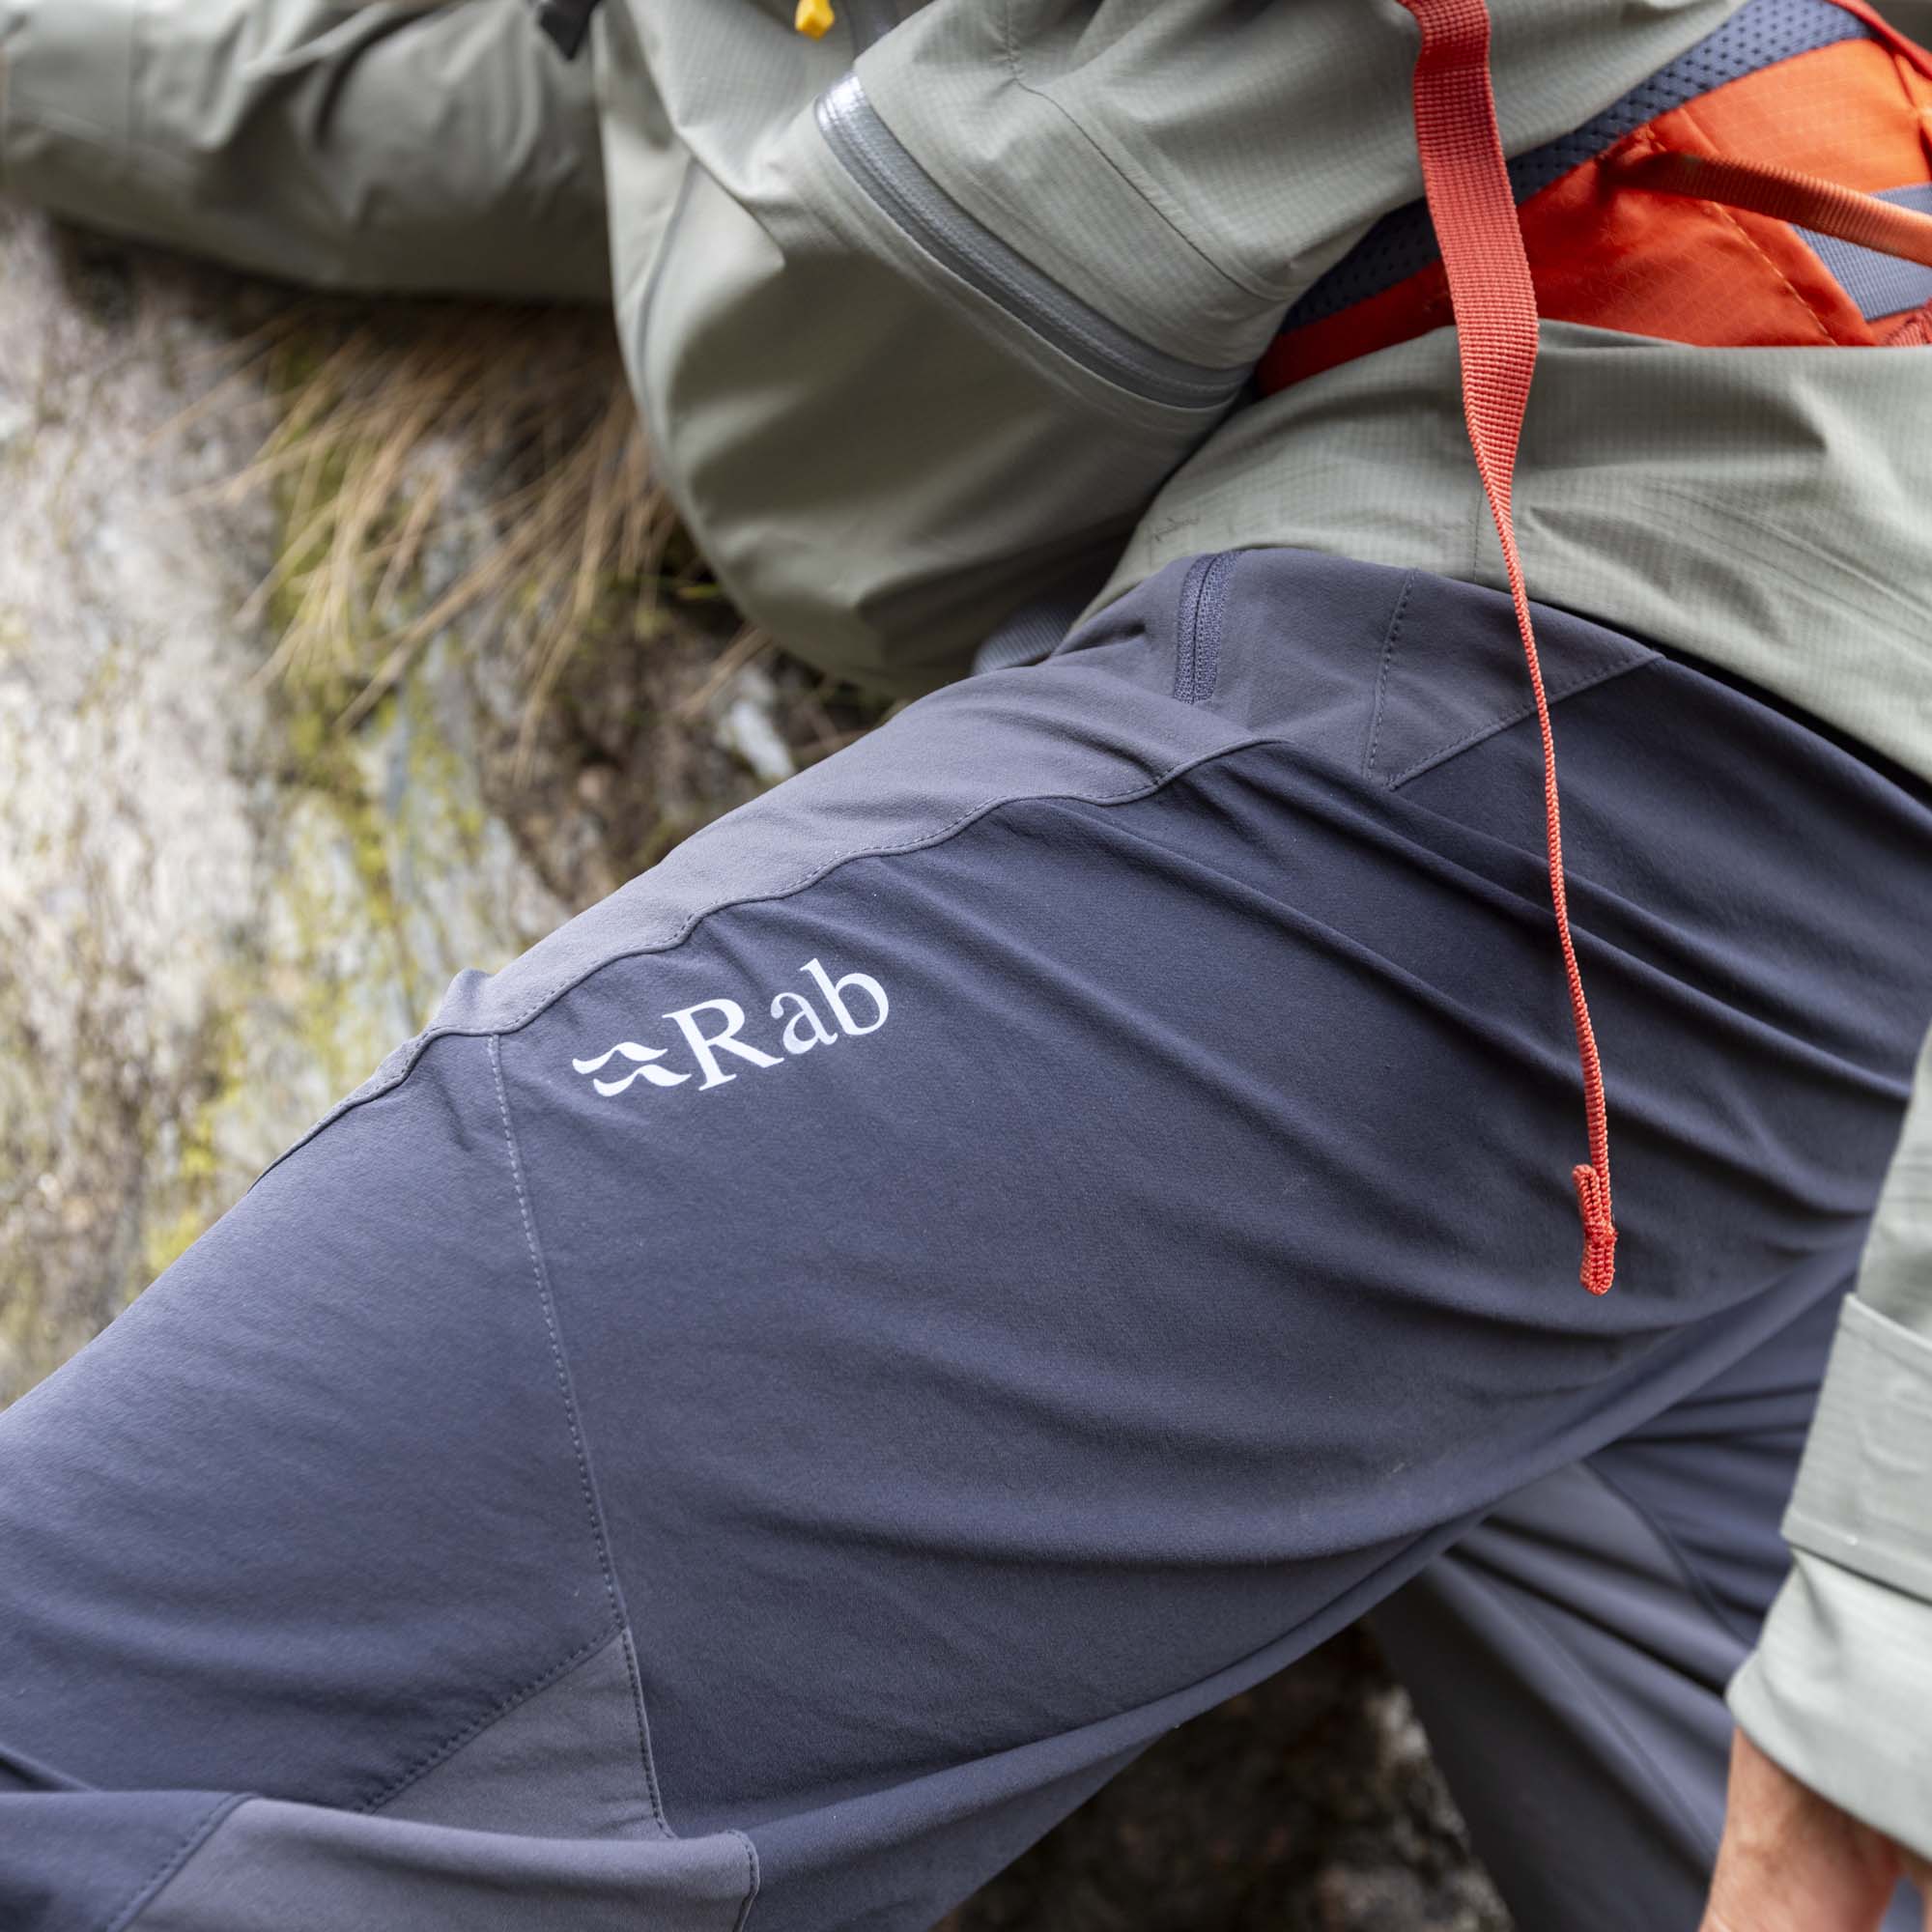 Rab Torque Mountain Pants Men's Hiking Trousers